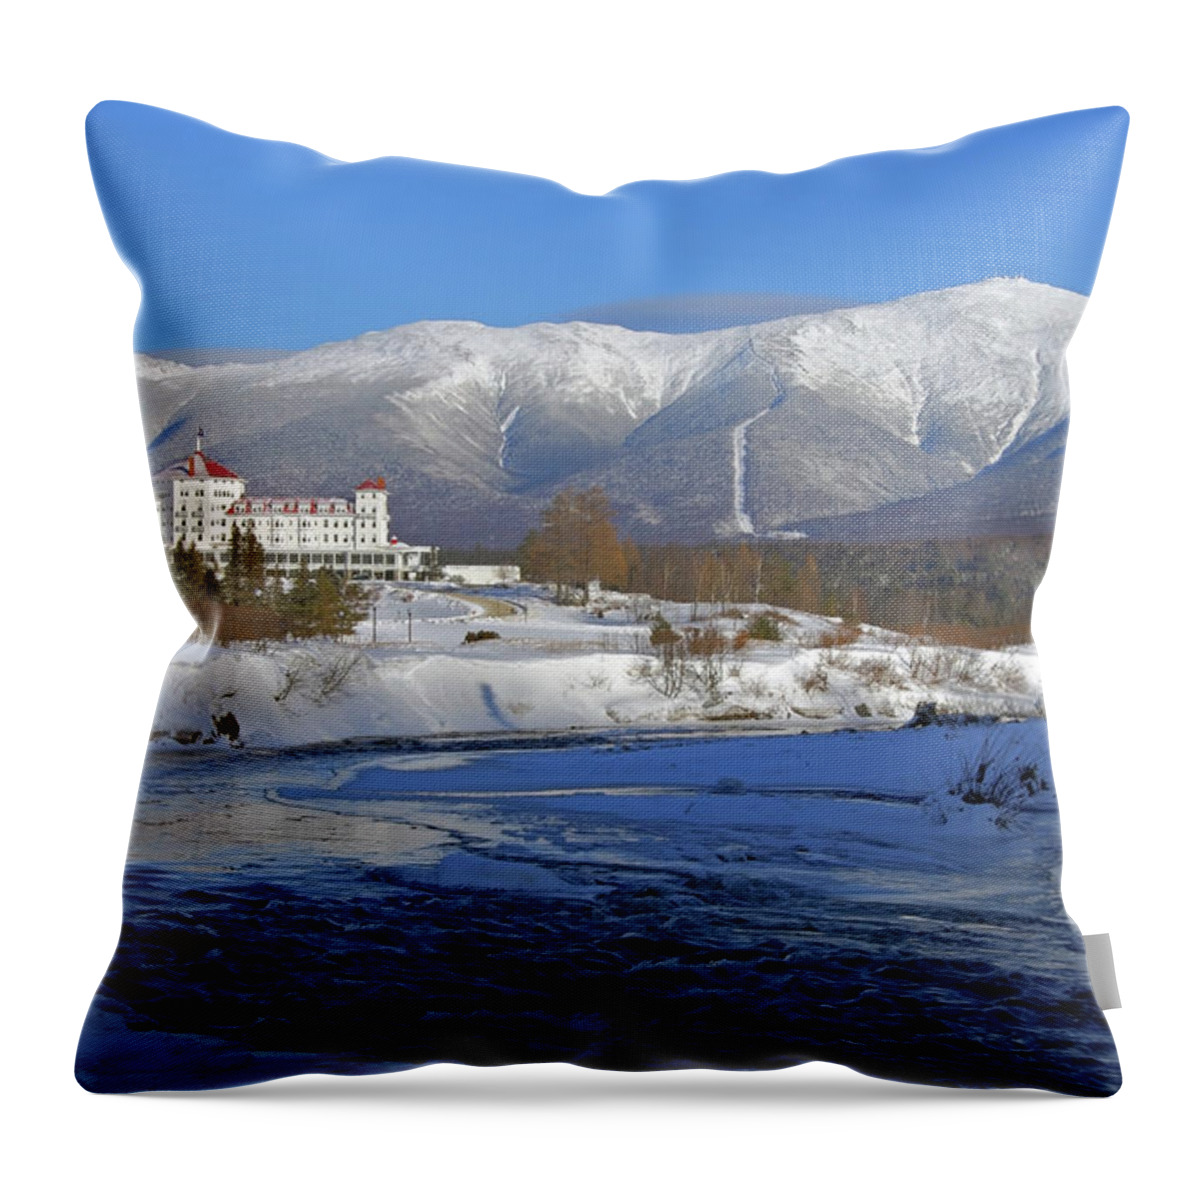 Mount Washington Throw Pillow featuring the photograph Mount Washington Hotel by Brett Pelletier